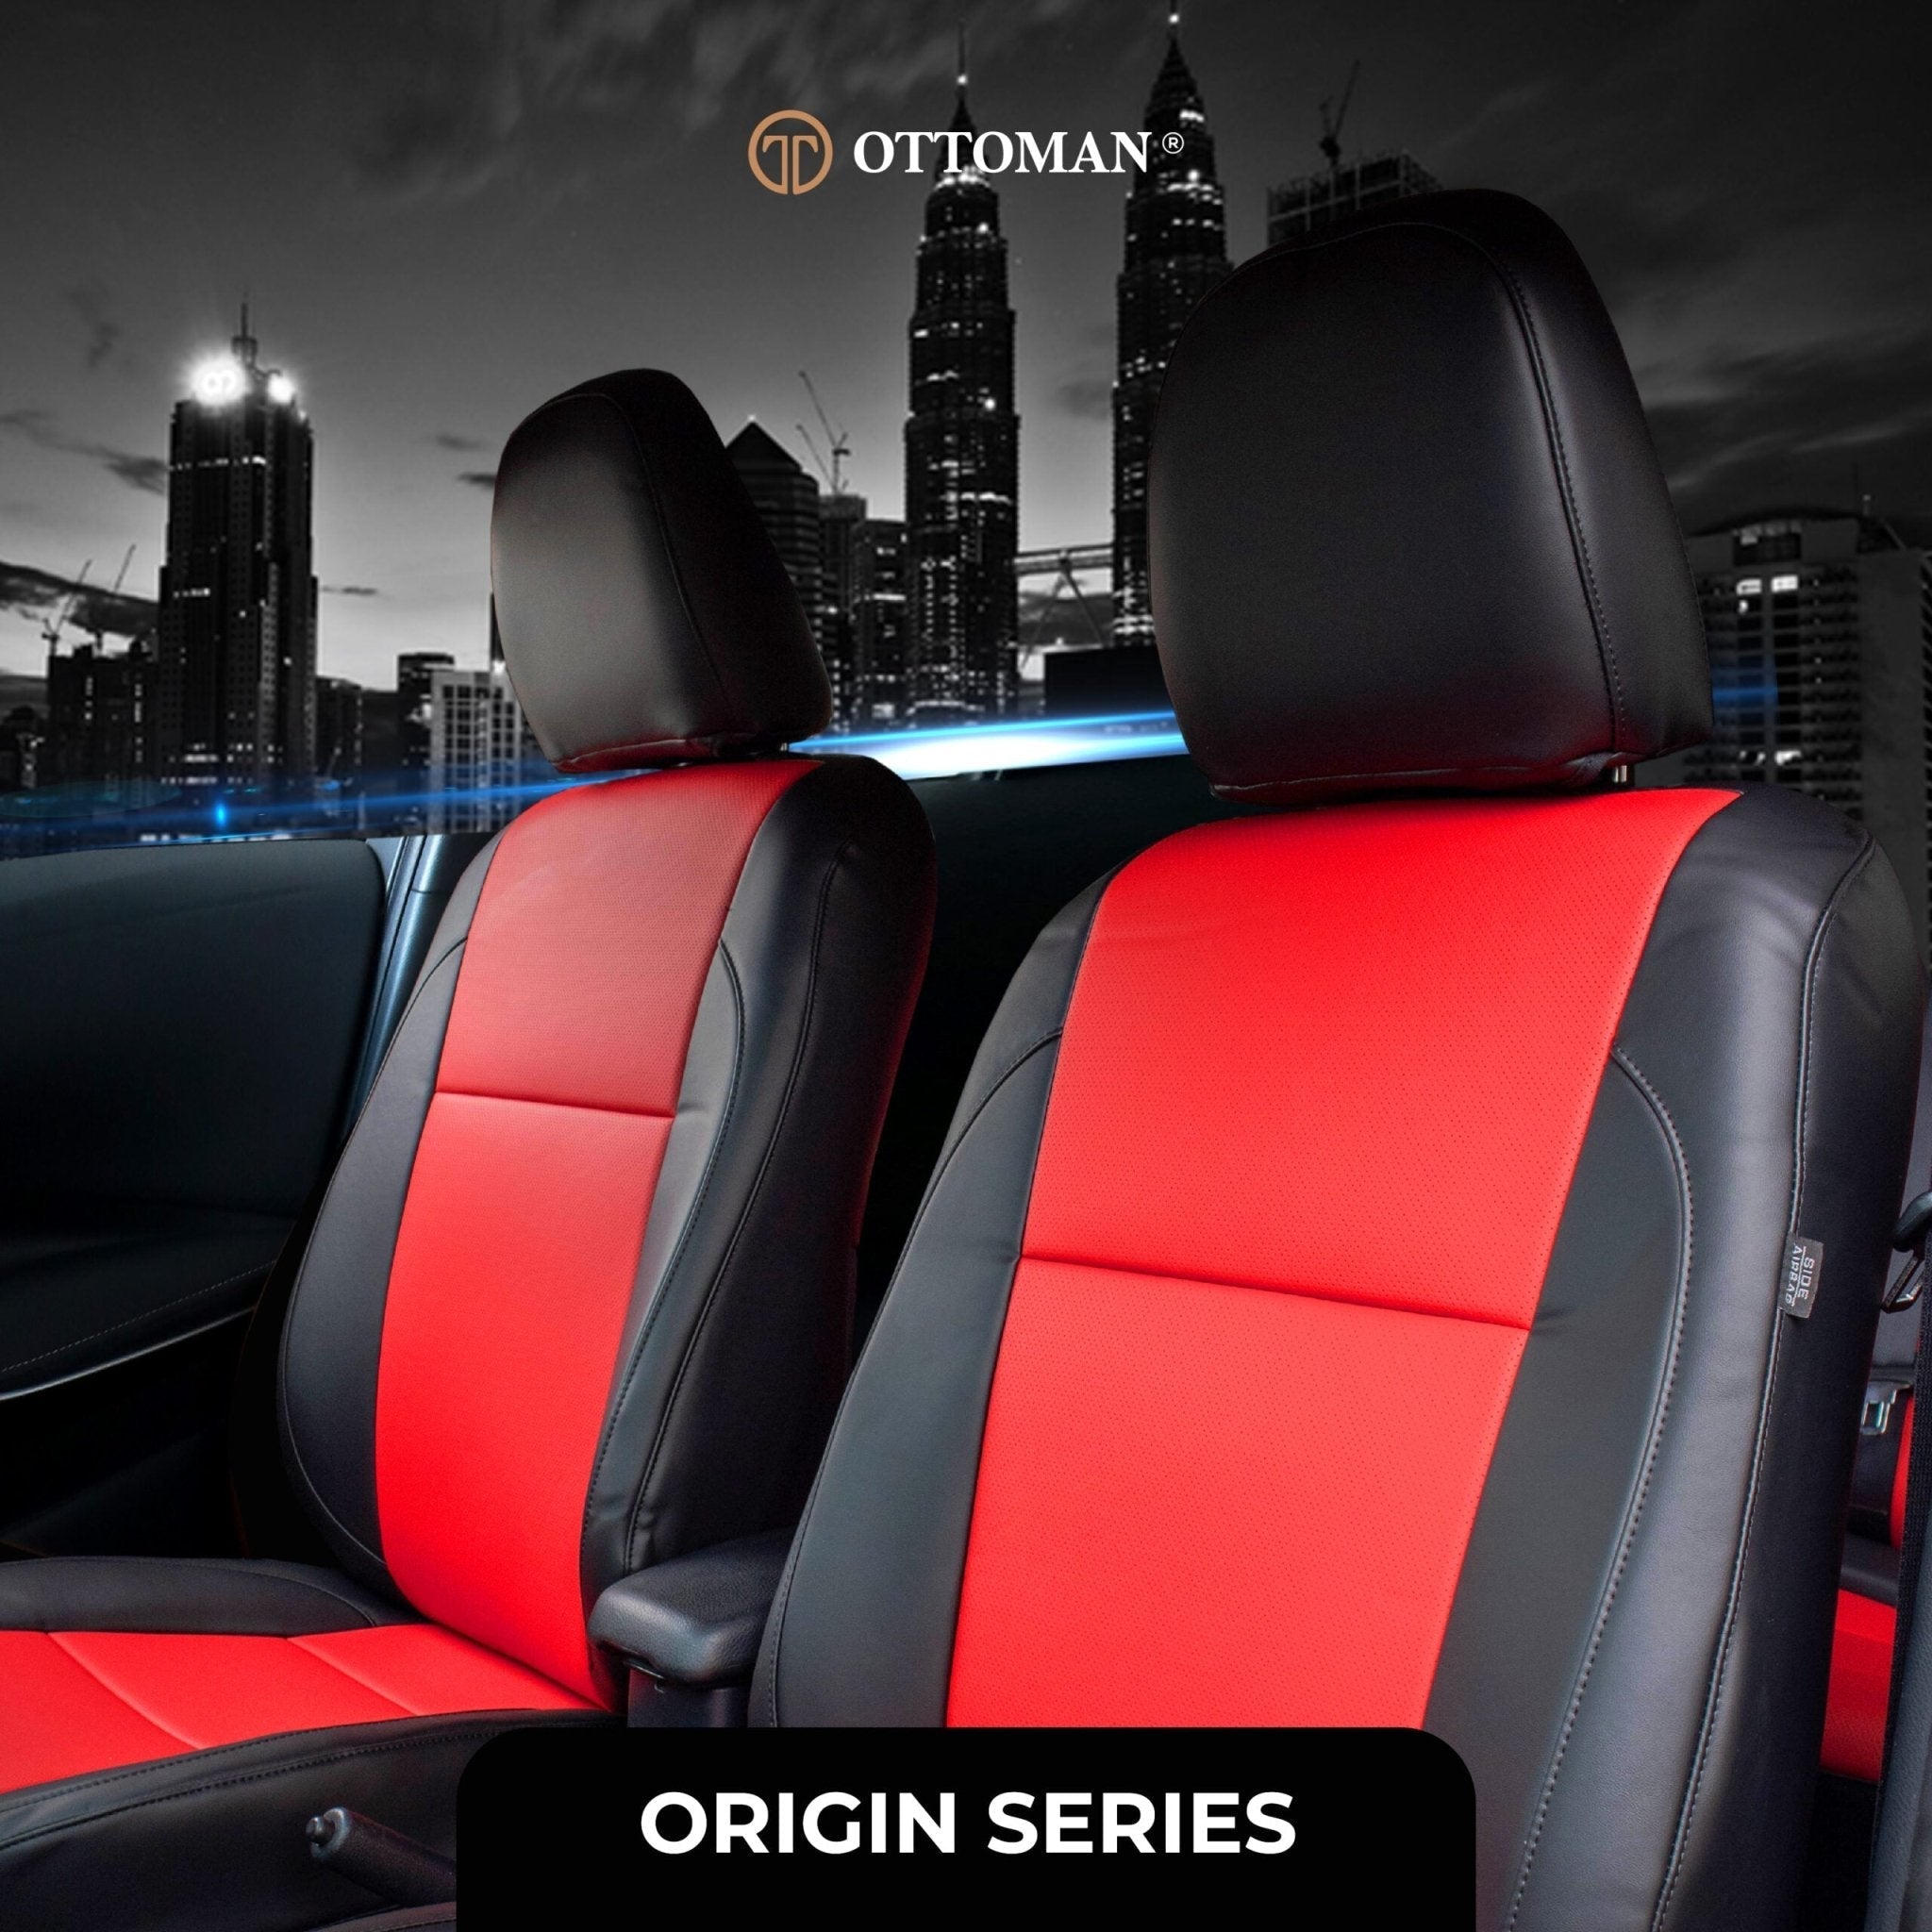 Proton Perdana (2013-Present) Ottoman Seat Cover Seat Cover in Klang Selangor, Penang, Johor Bahru - Ottoman Car Mats